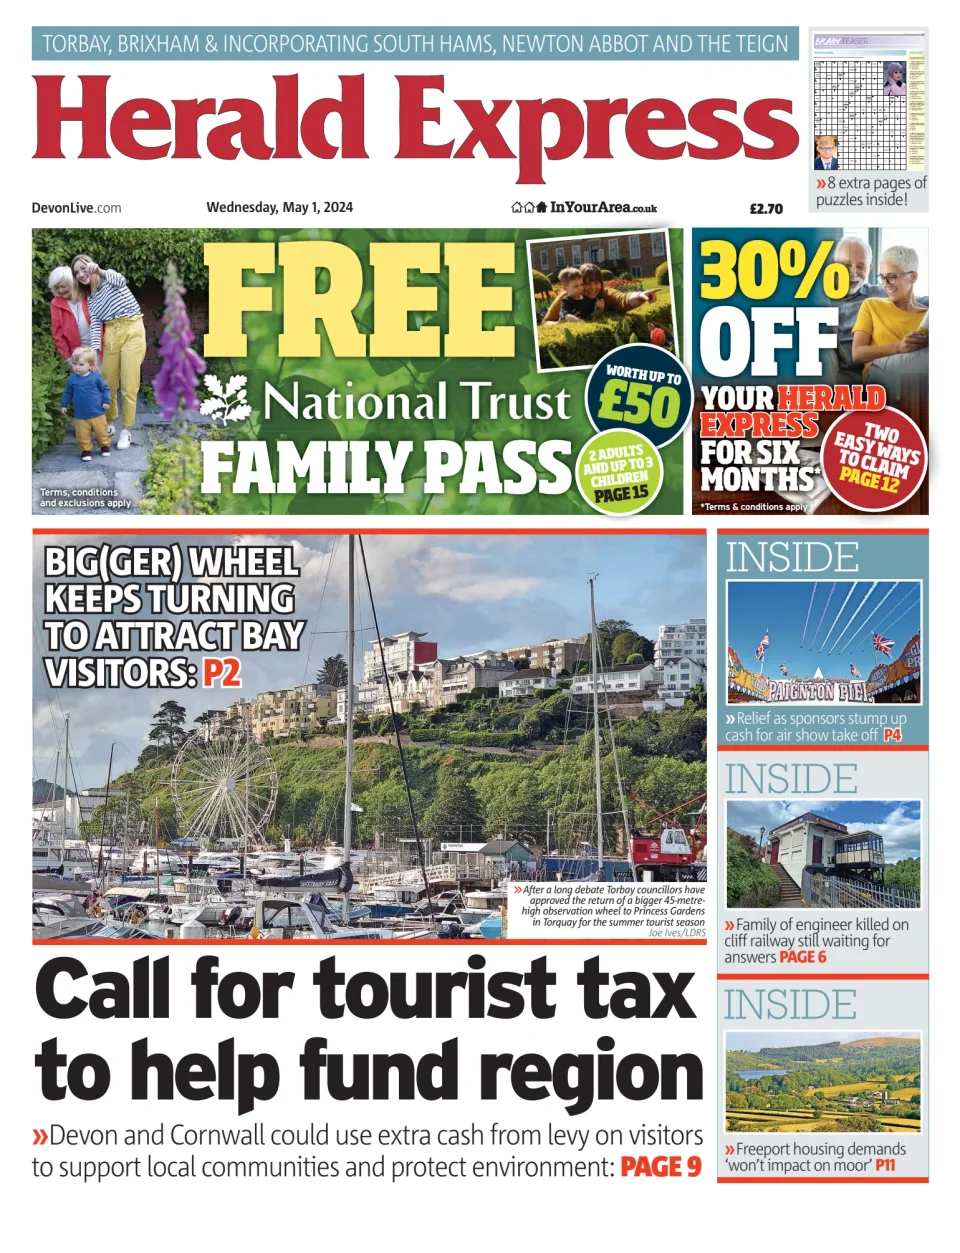 Herald Express (Torbay, Brixham & South Hams Edition)													